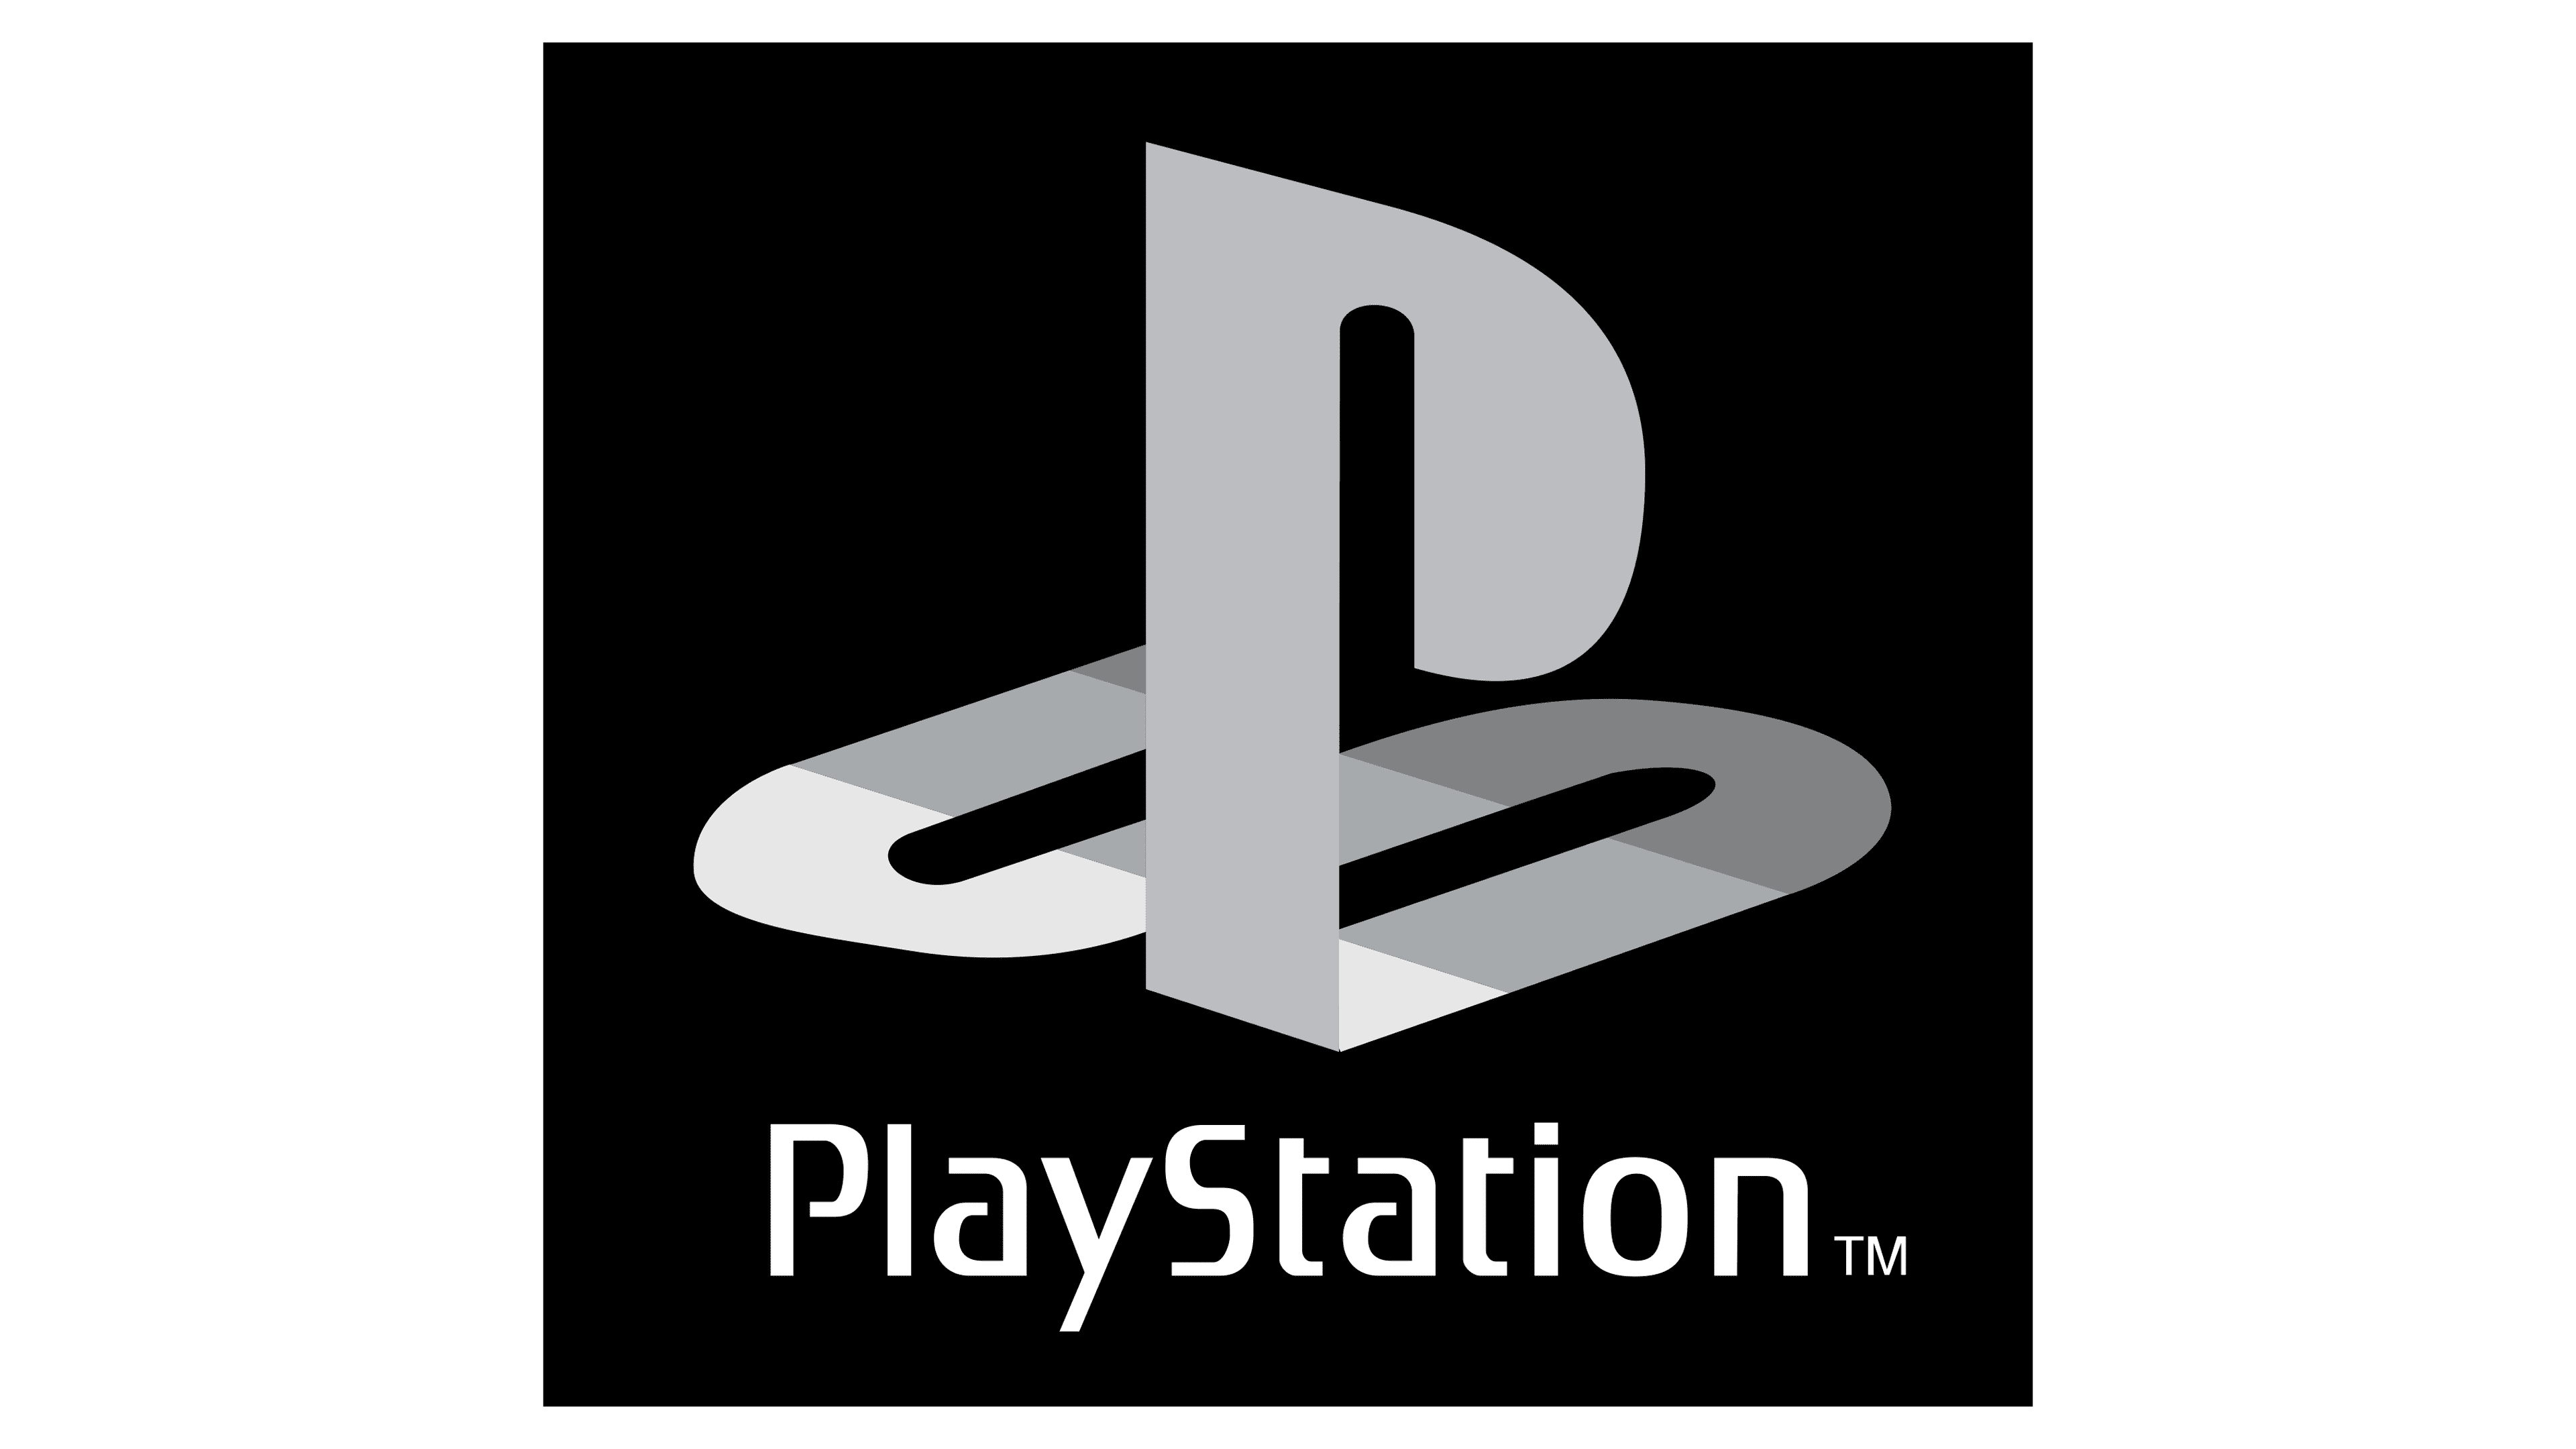 Логотип пс. Логотип Sony PLAYSTATION 1. Sony PLAYSTATION 4 logo. Надпись плейстейшен. Sony PLAYSTATION надпись.